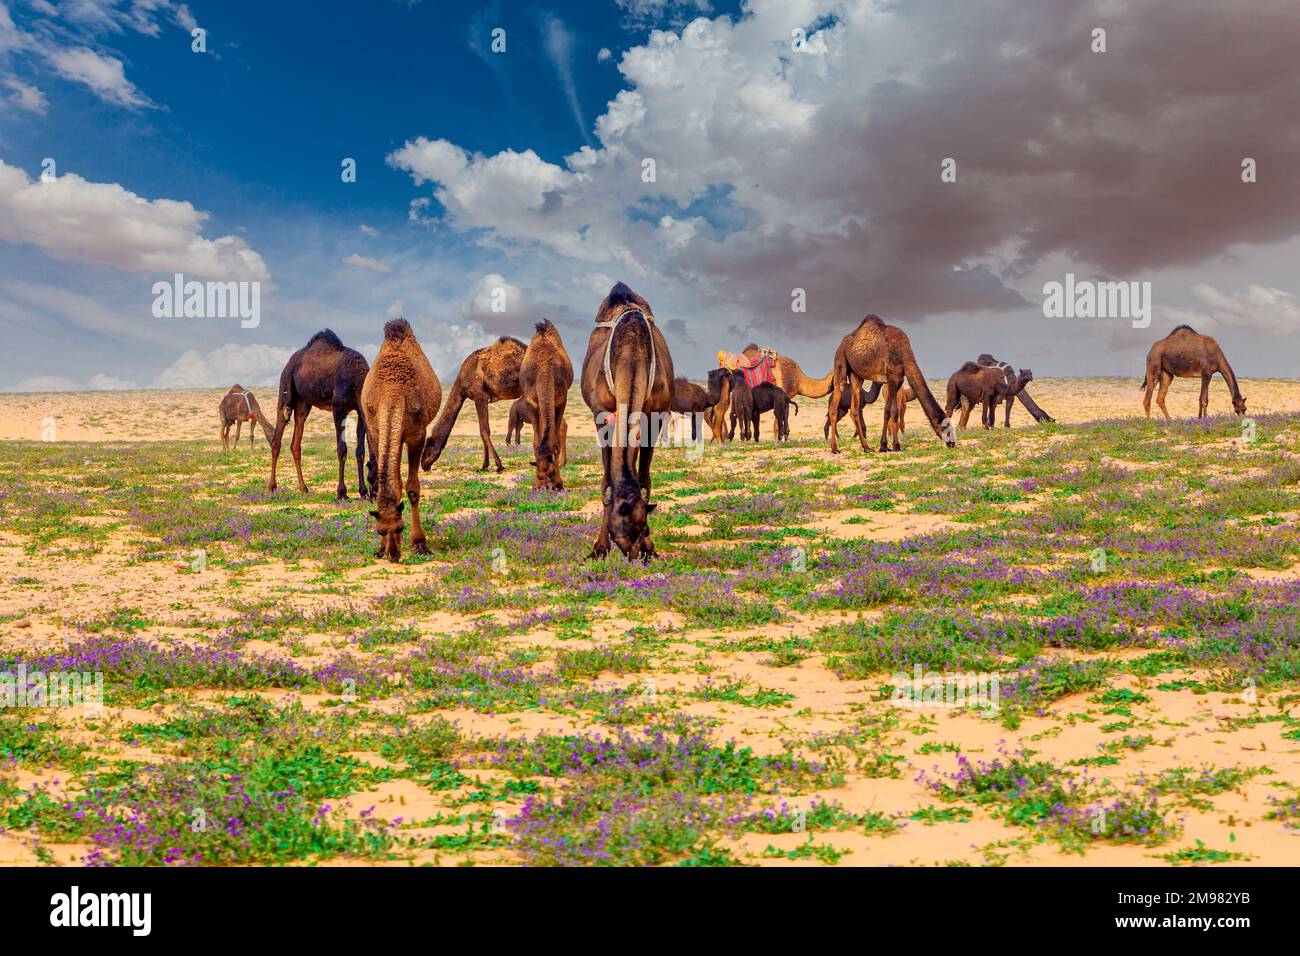 Kamelherde grast in der Wüste, Saudi-Arabien Stockfoto